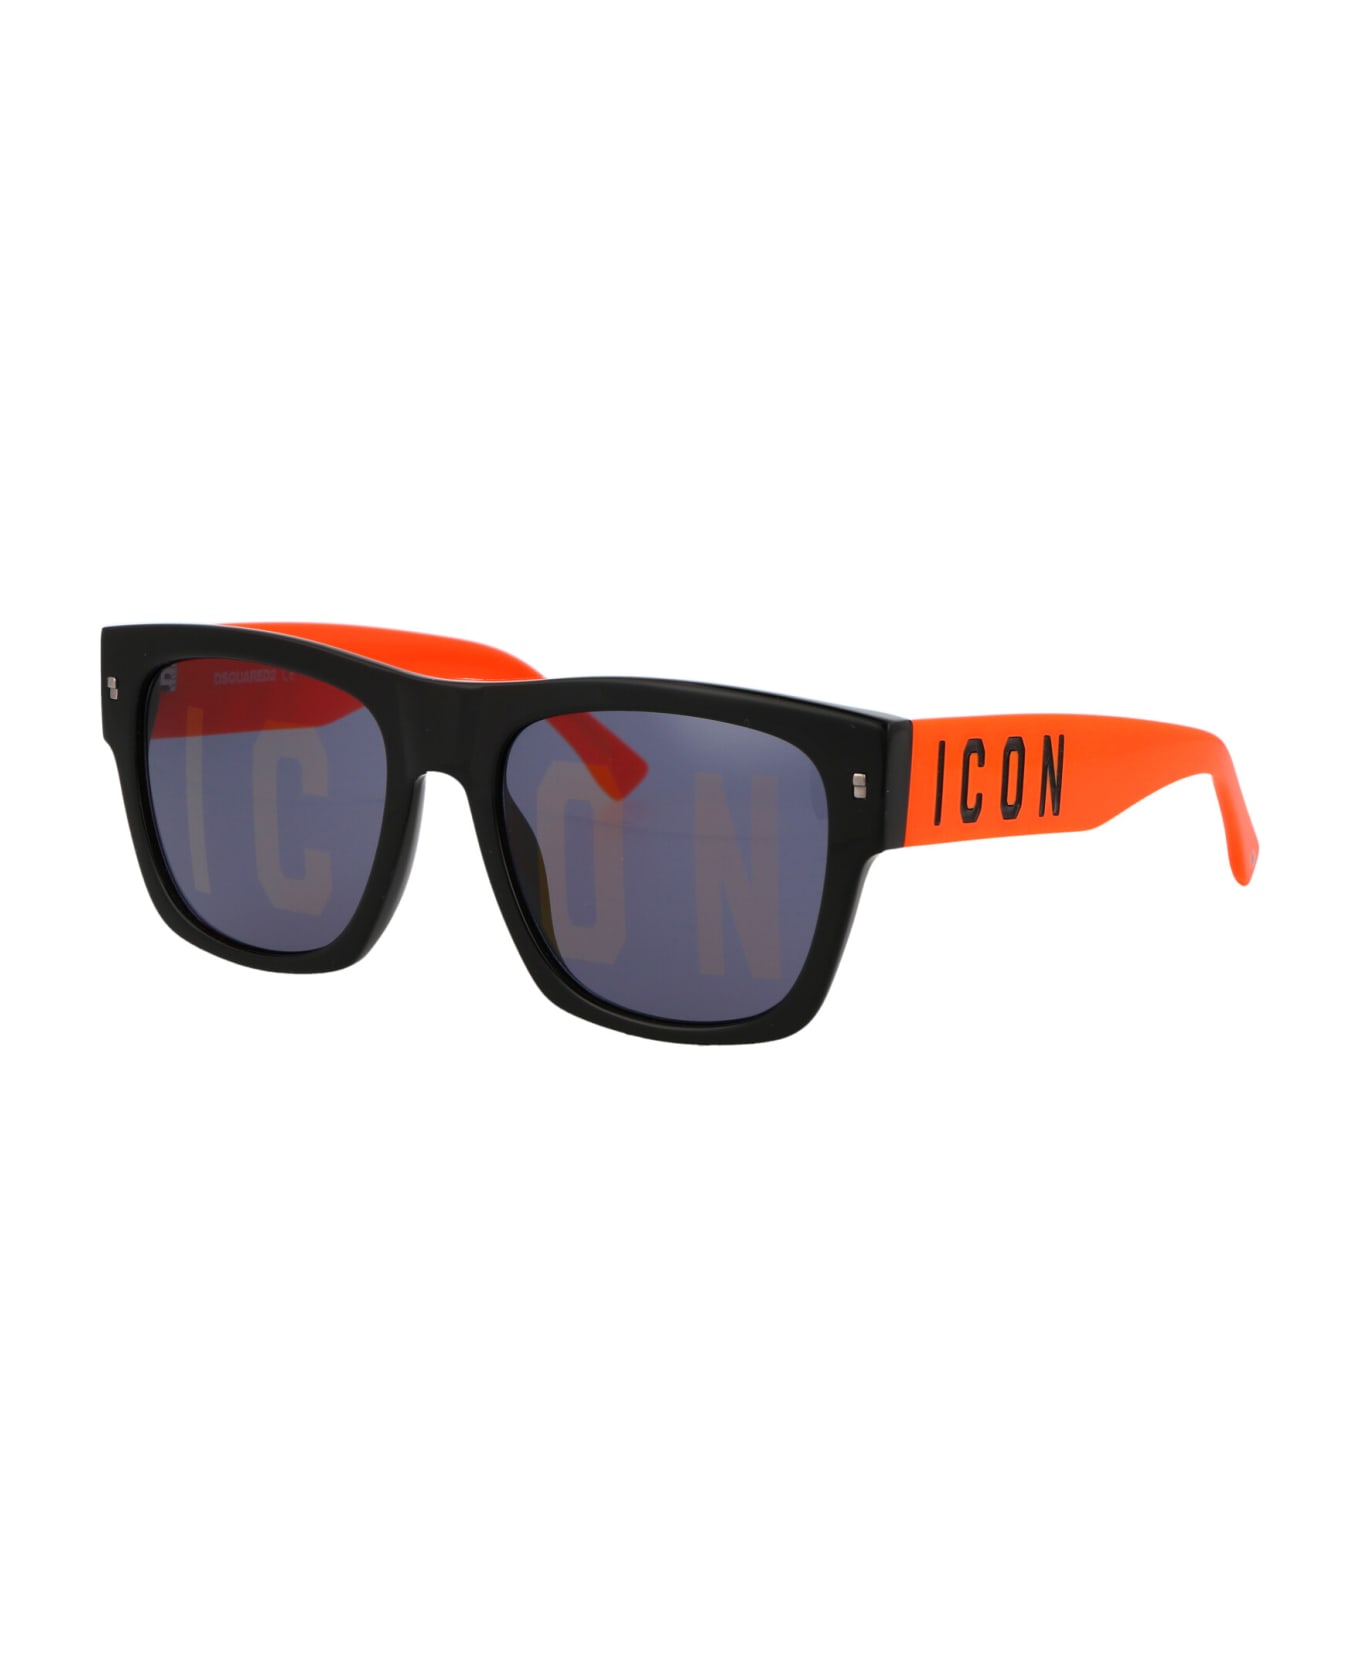 Dsquared2 Eyewear Icon 0004/s Sunglasses - 8cat eye-frame tinted sunglasses Braun